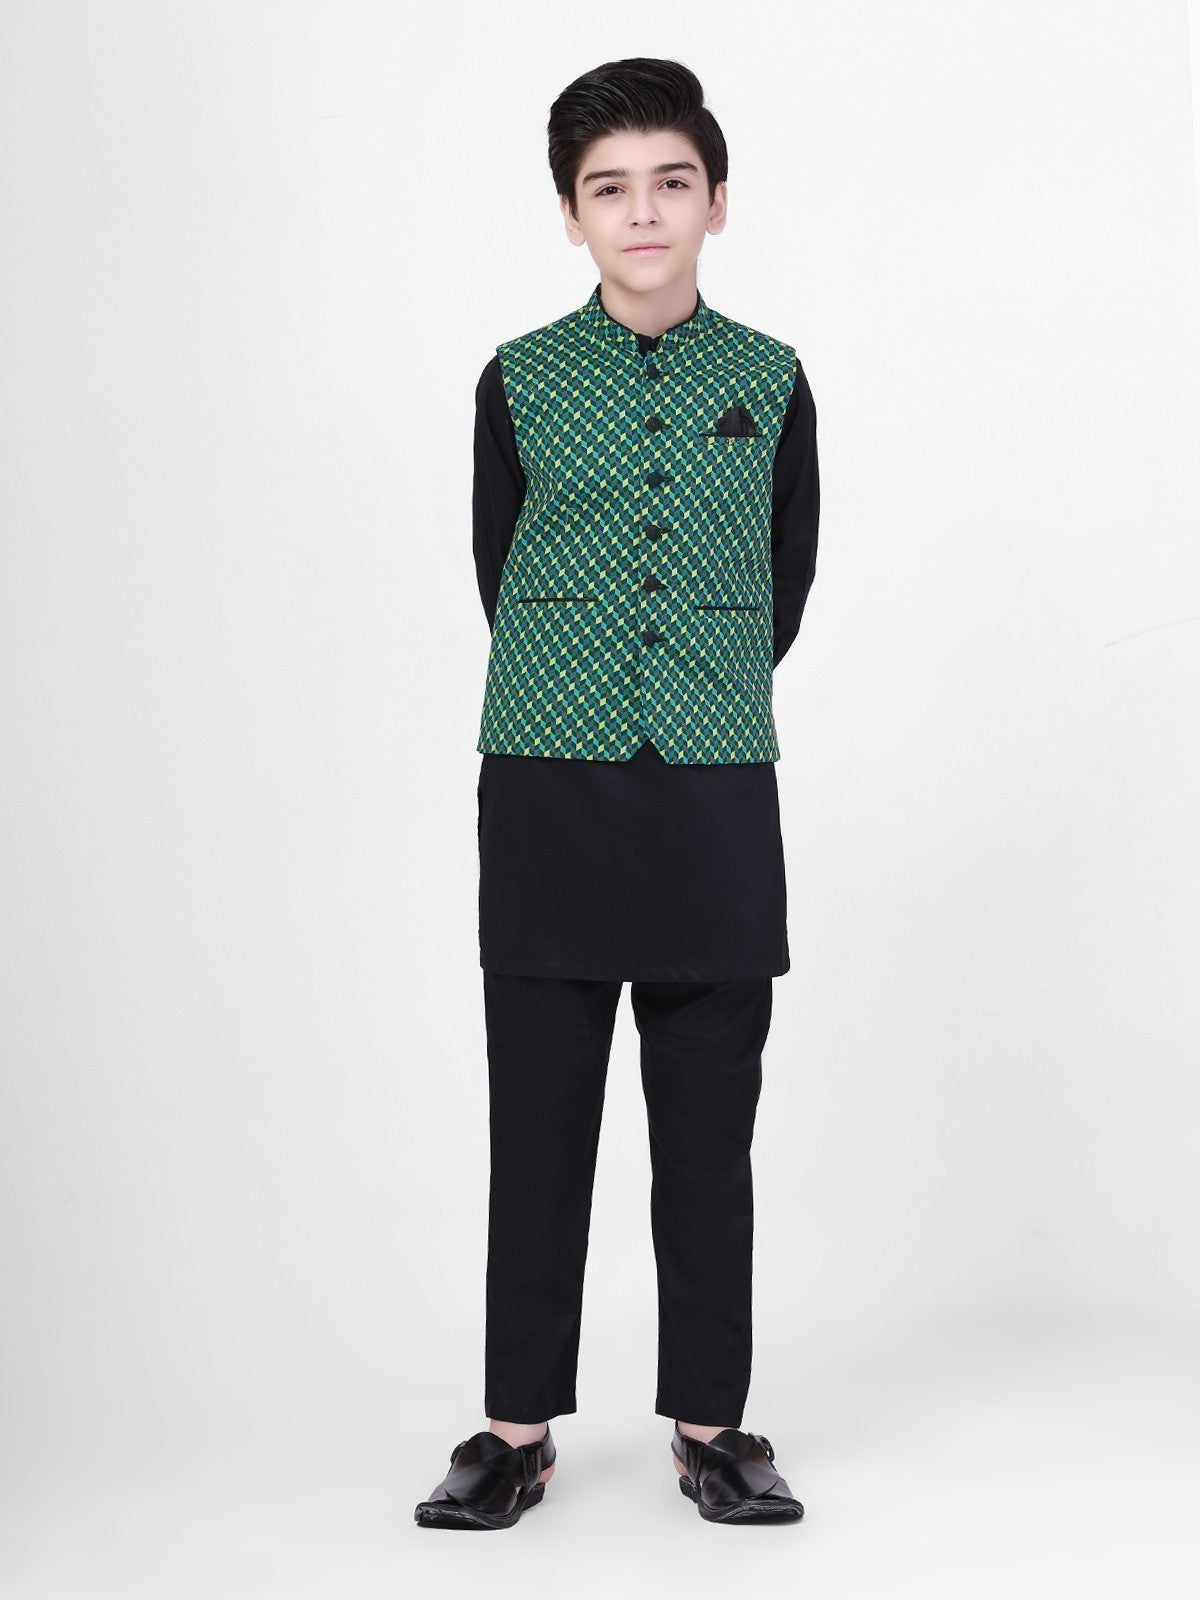 Boy's Green & Black Waist Coat Suit - EBTWCS21-25133